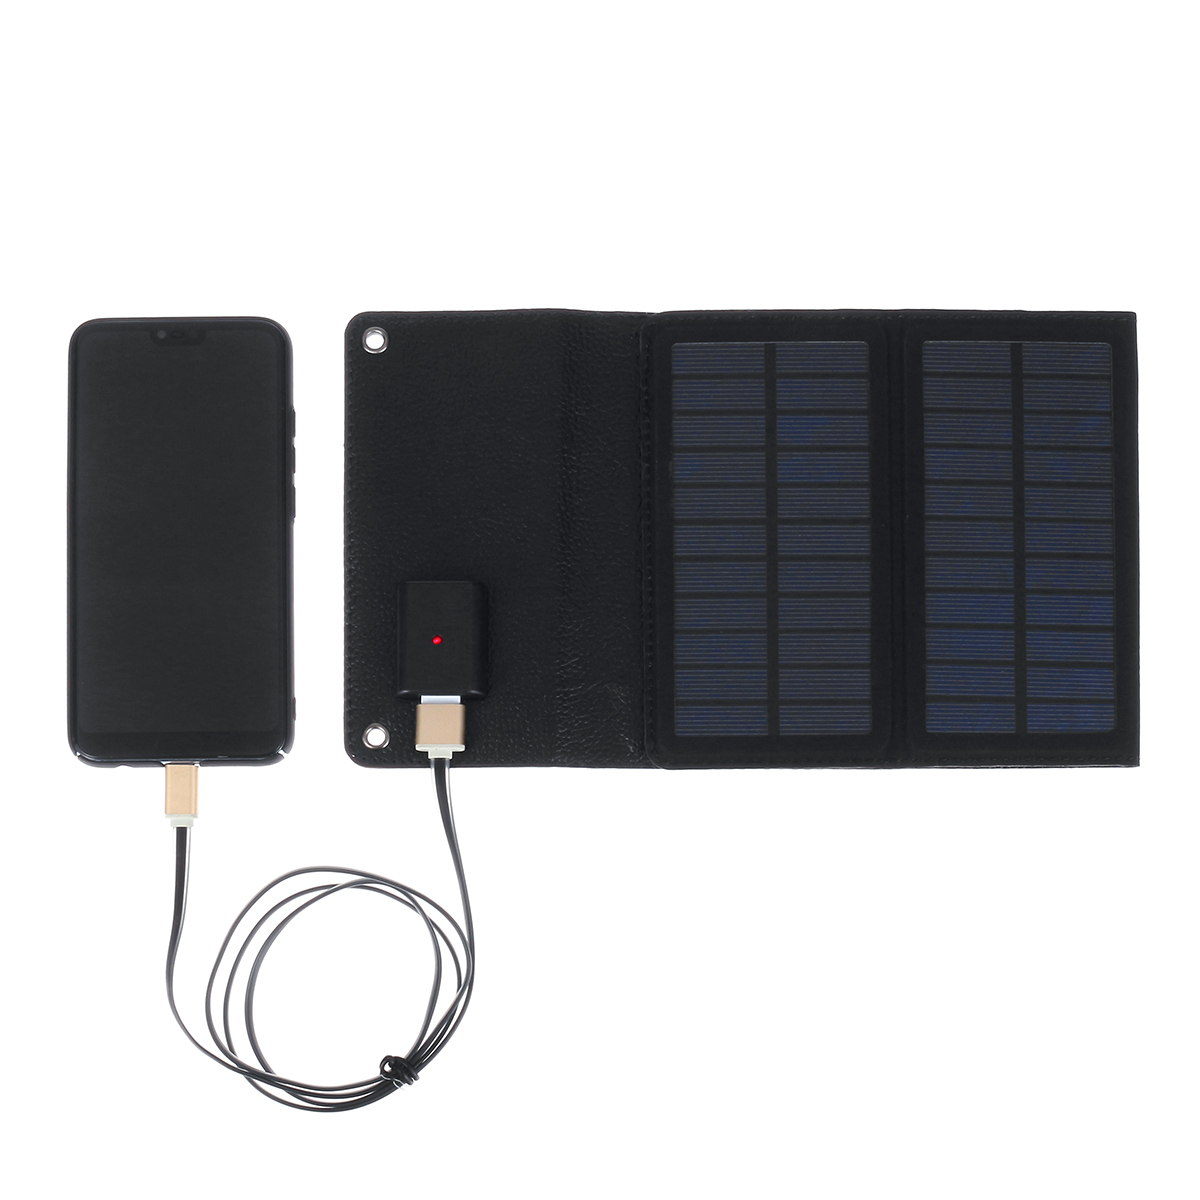 7W 5V Waterproof Foldable Mono-crystalline Silicon Solar Panel With LED Charging indicator & USB Interface 20